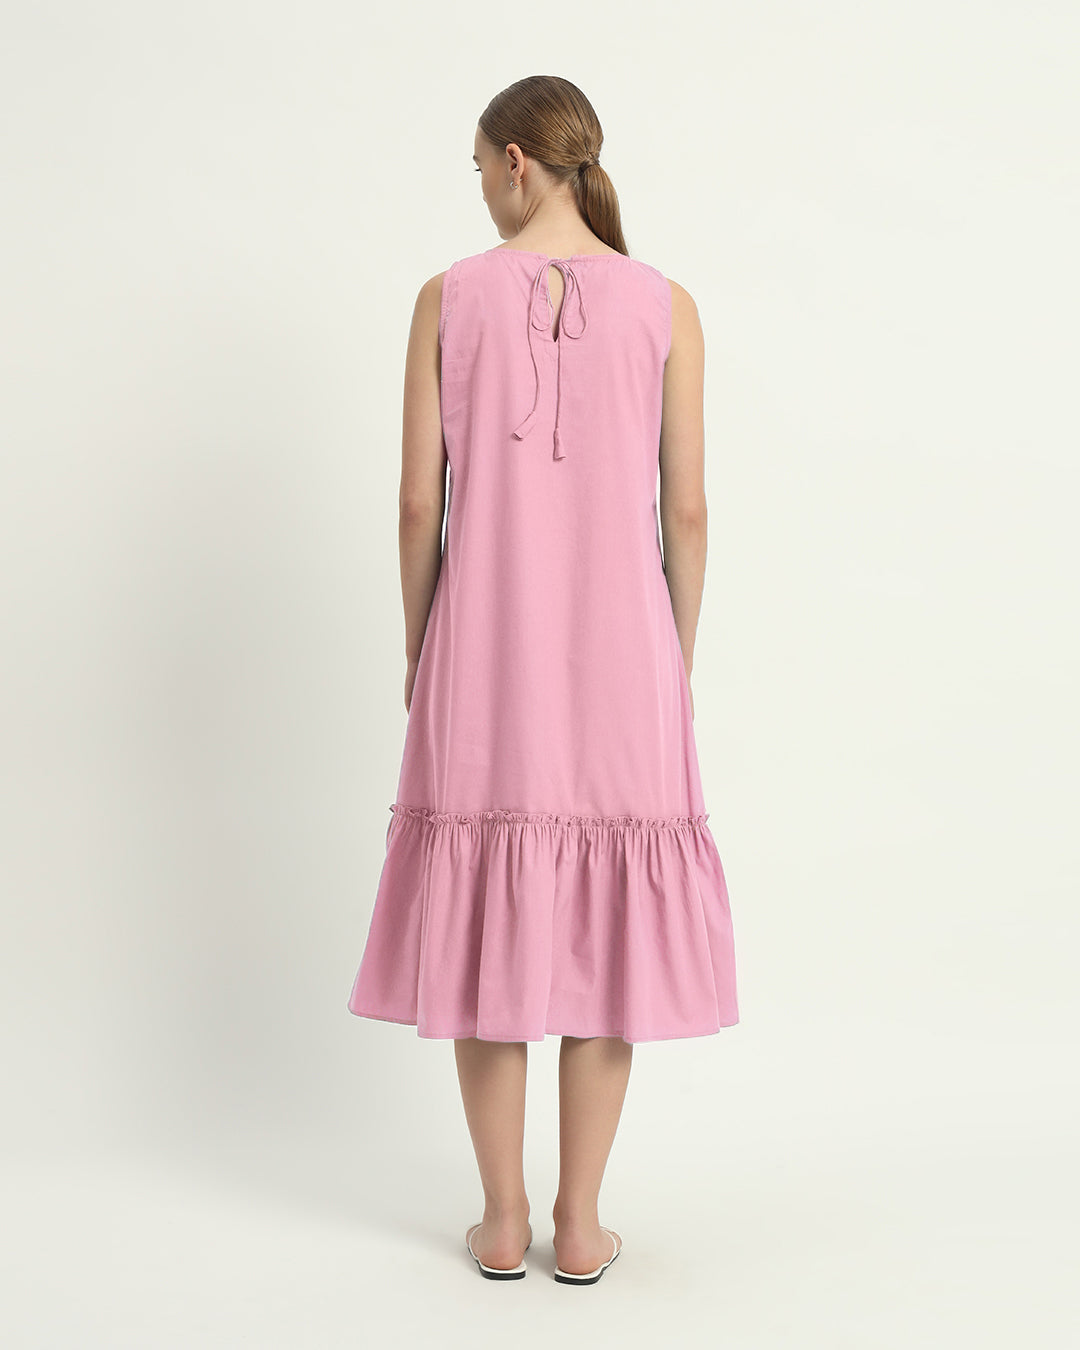 The Fondant Pink Millis Cotton Dress